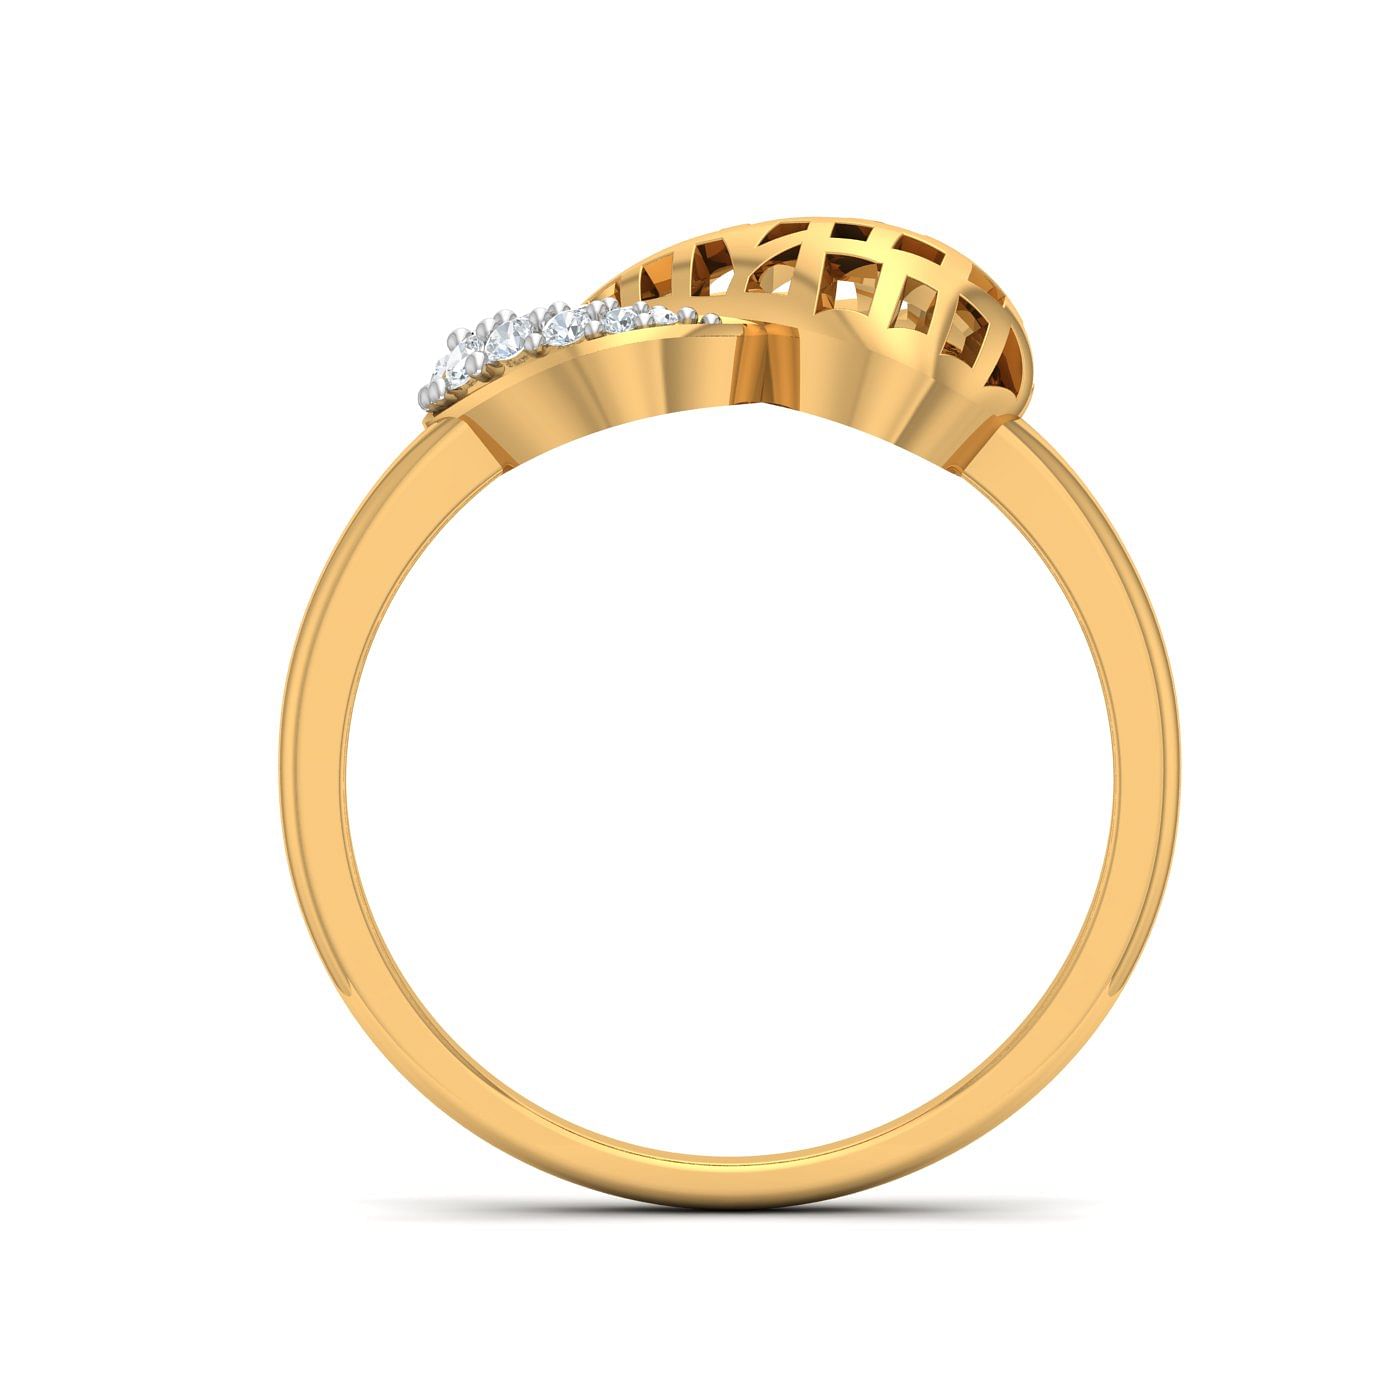 Aadhya Diamond Ring For Women | Modern Style Design Diamond Ring For Women In Yellow Gold